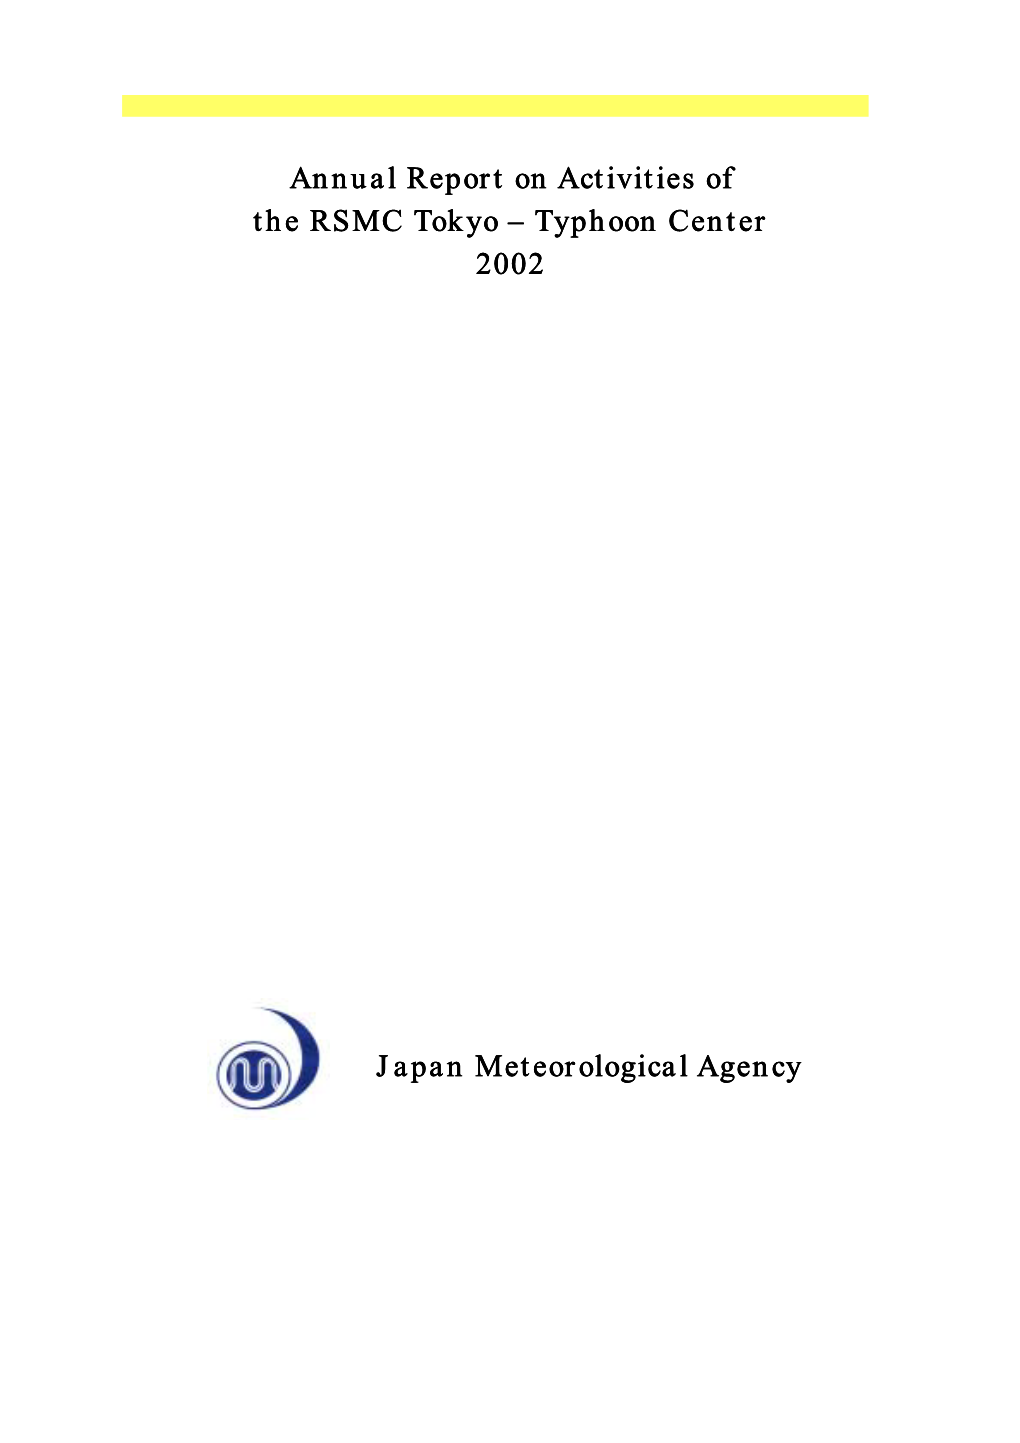 Annual Report on Activities of the RSMC Tokyo – Typhoon Center 2002